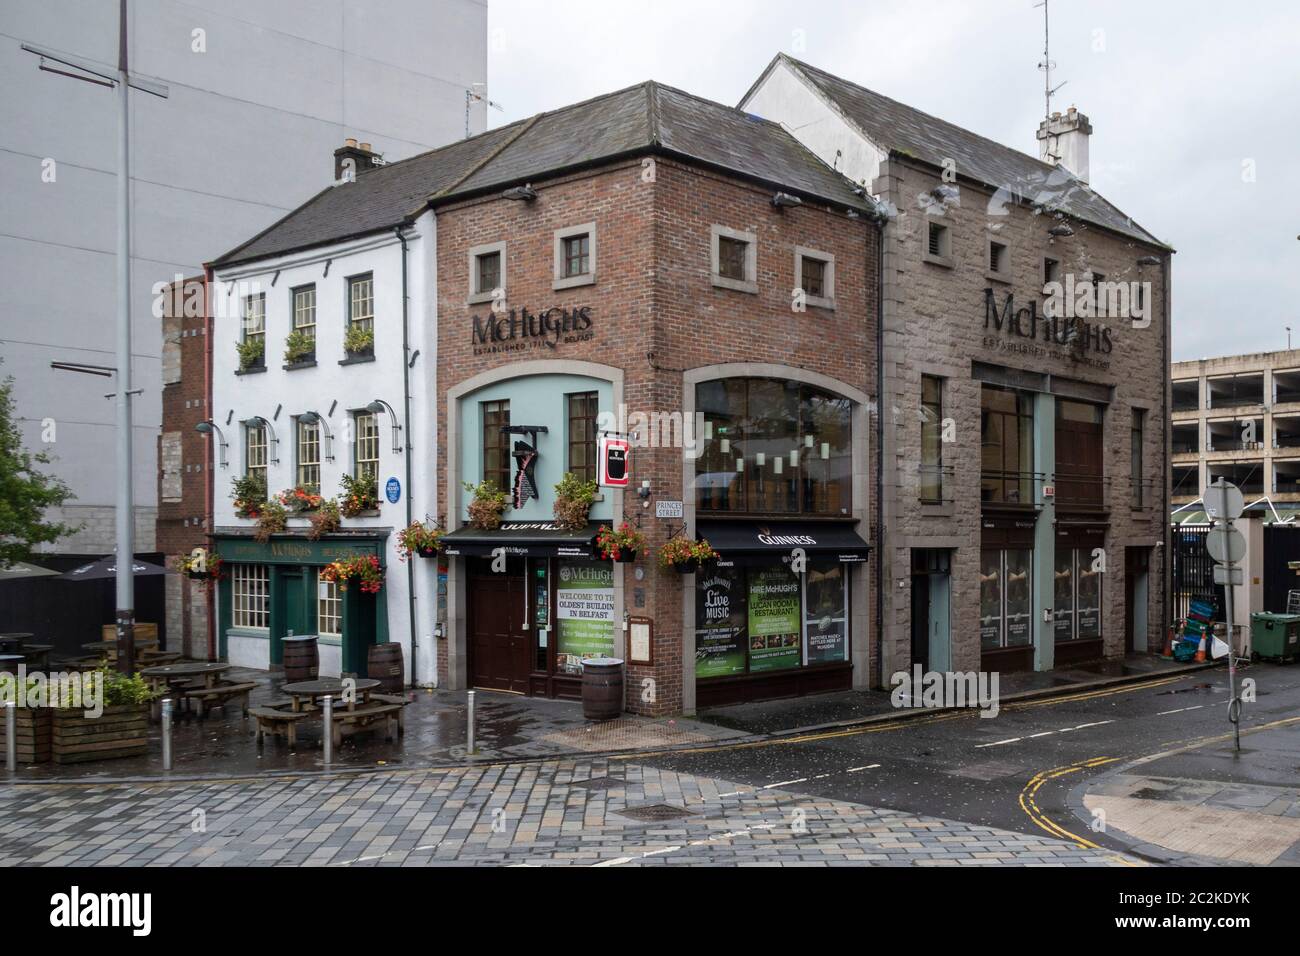 McHugh's Bar and Restaurant in Belfast, Northern Ireland, UK, Europe Stock Photo